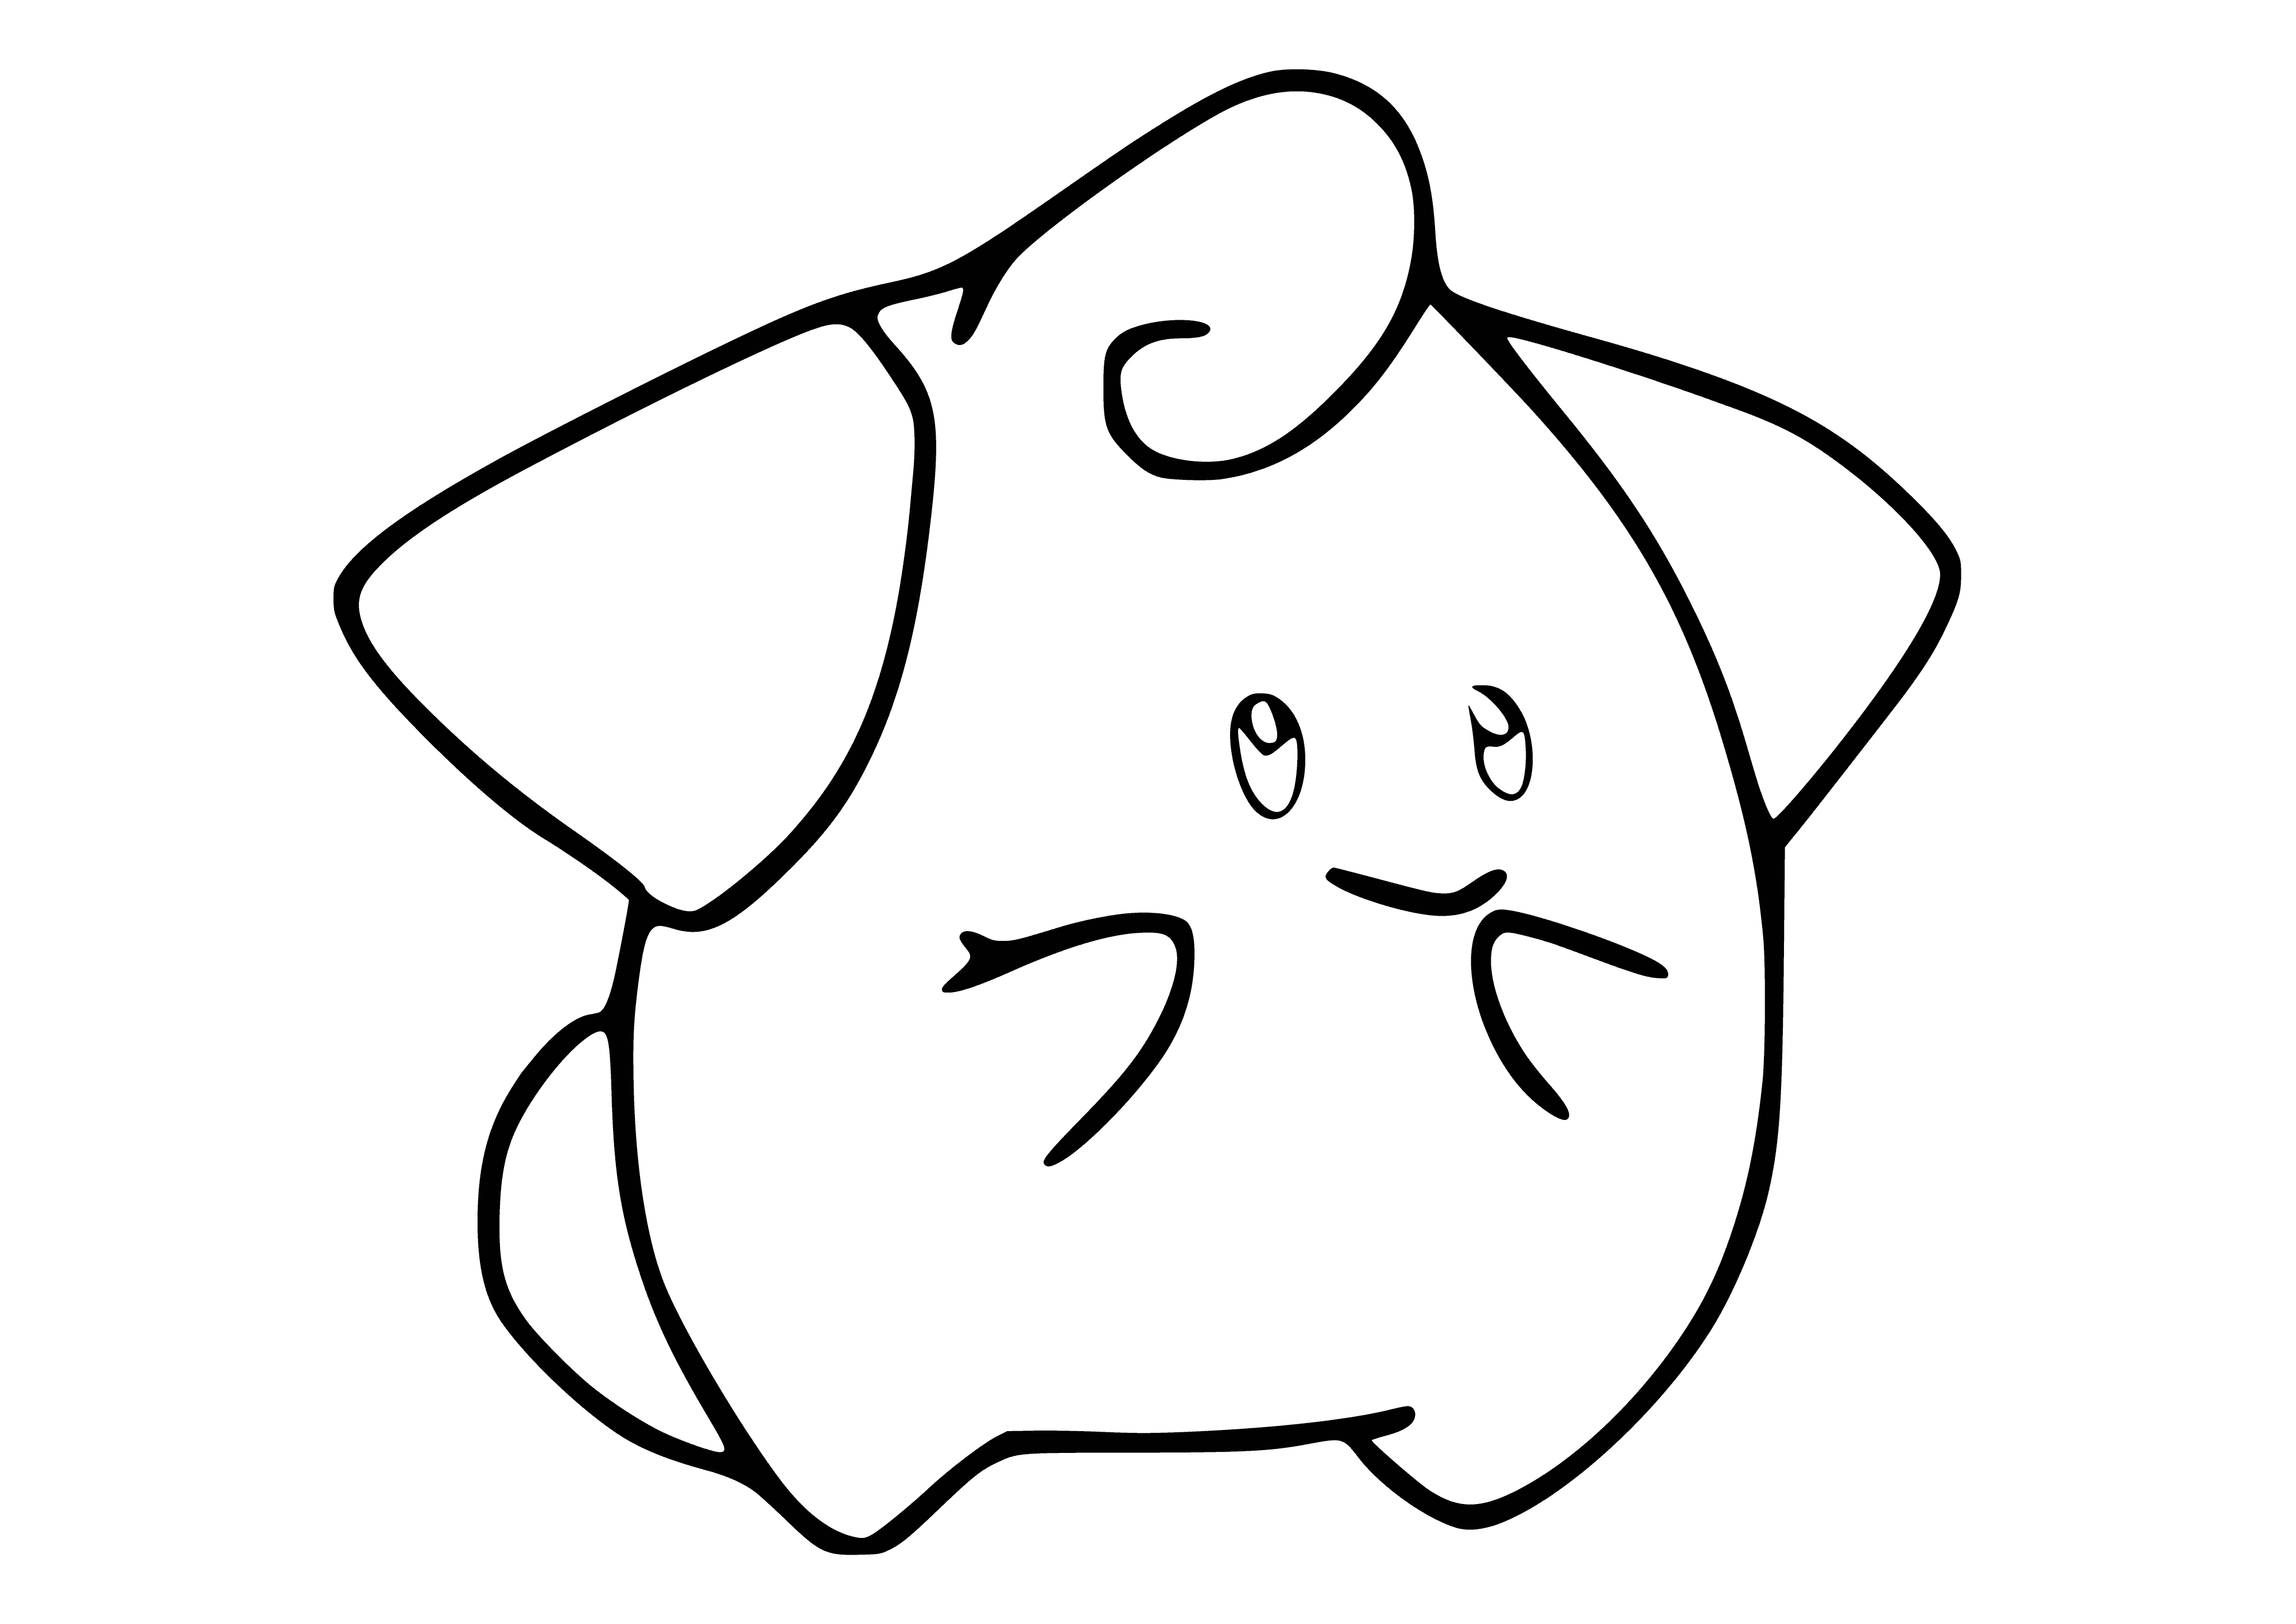 Pokemon Kleffa (Cleffa) coloring page